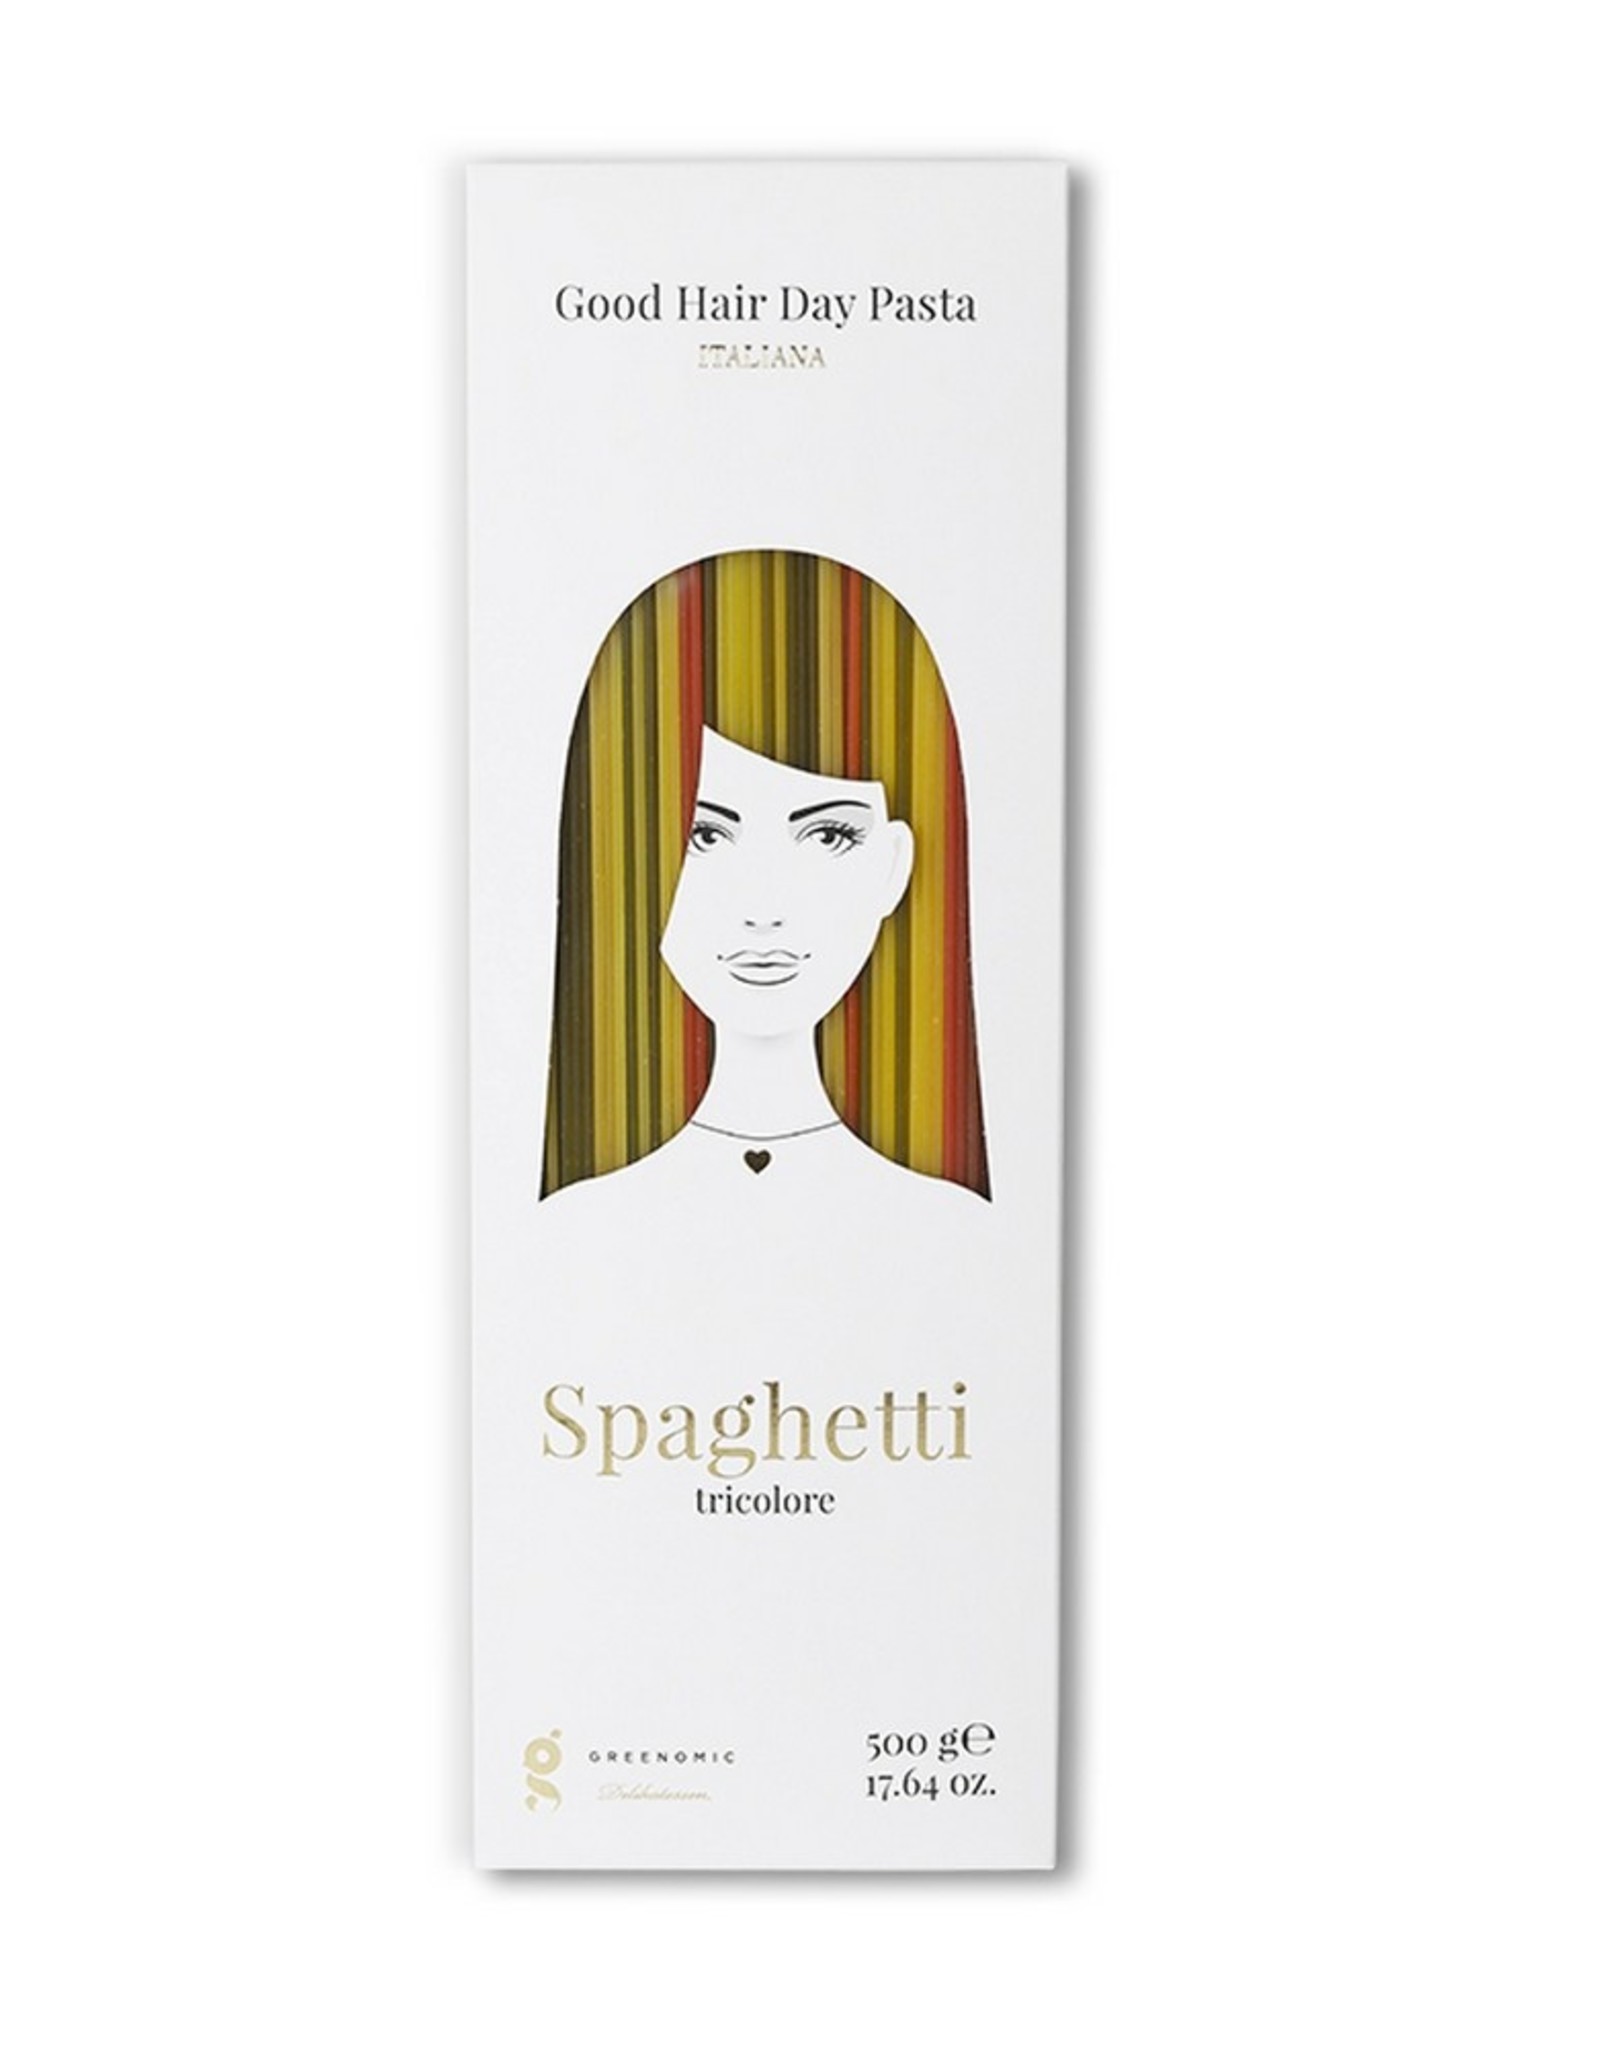 Good Hair Day Pasta Spaghetti Tricolore